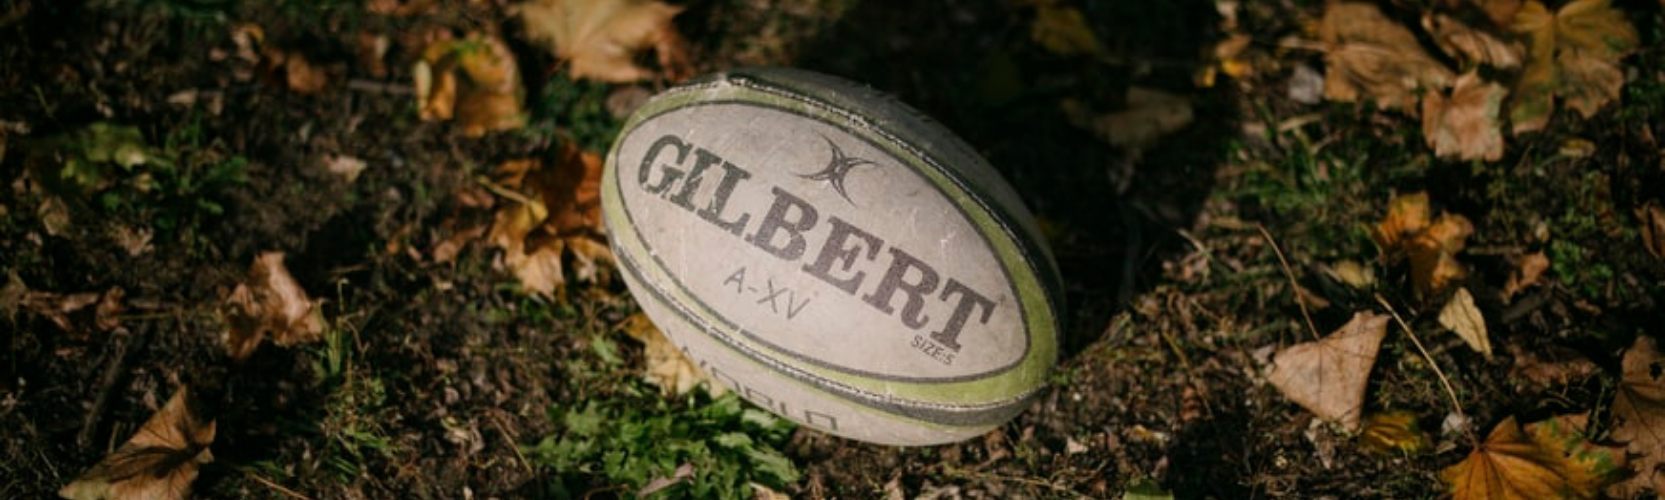 rugby--1665x500-new.jpg